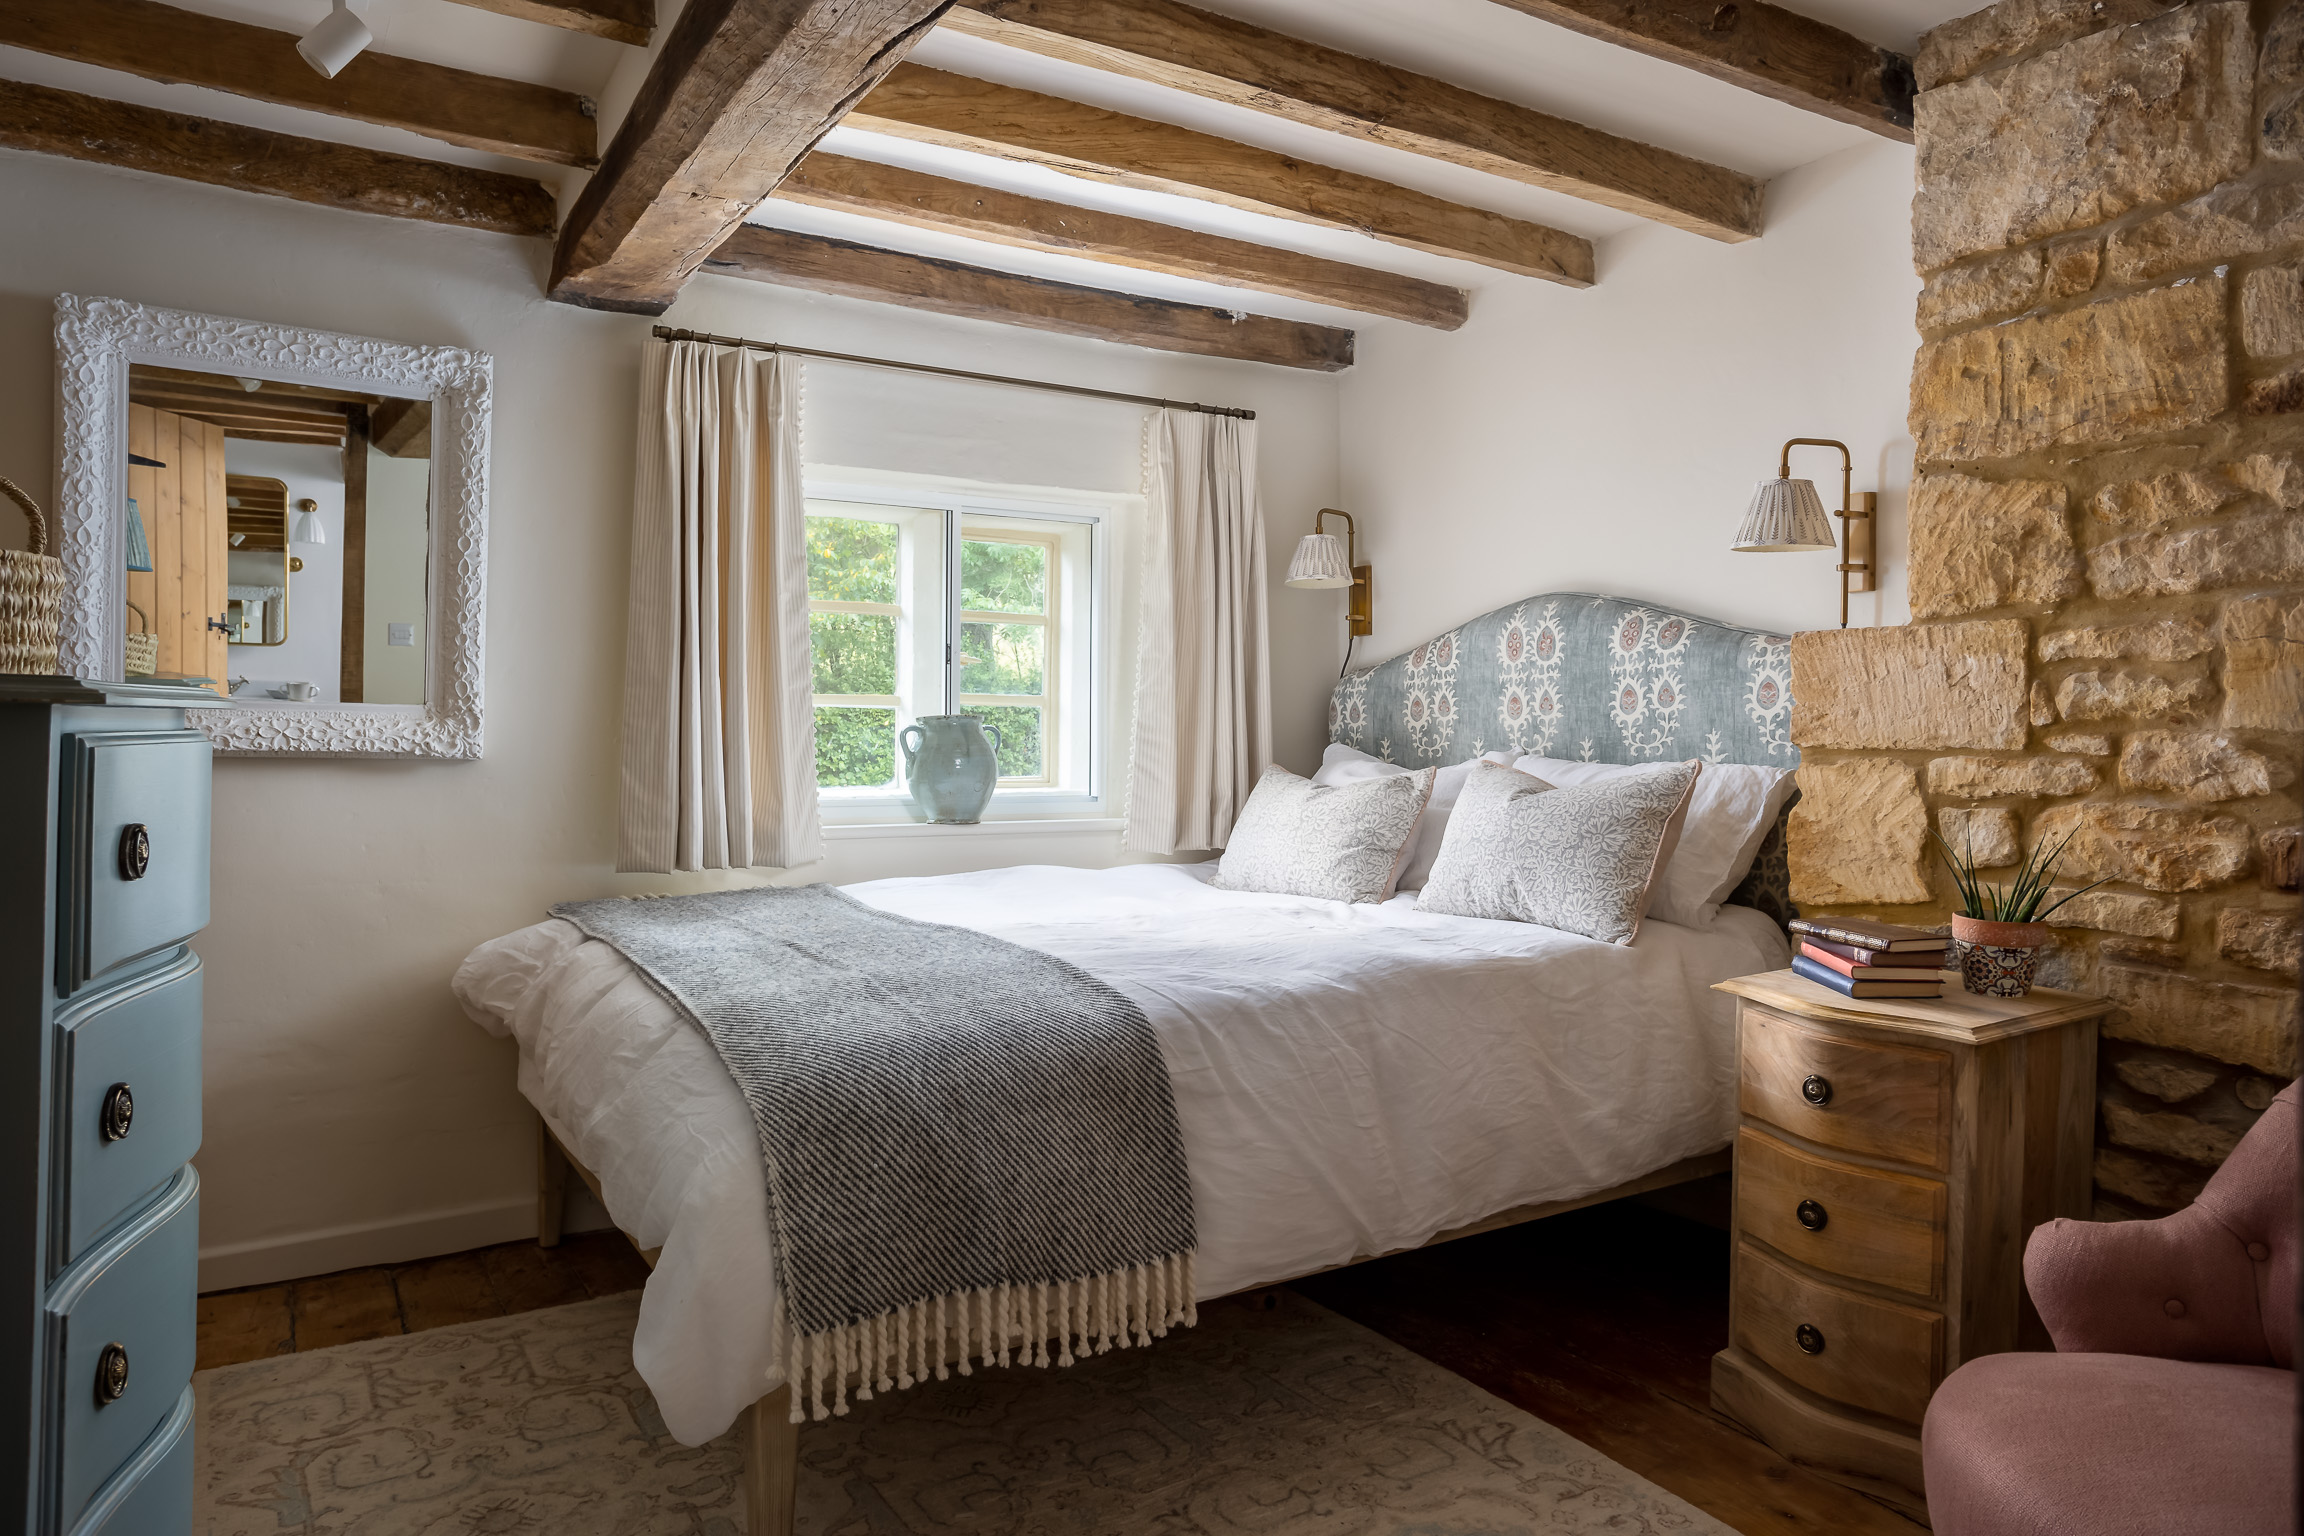 King size bed & patterned headboard in beamed cottage bedroom